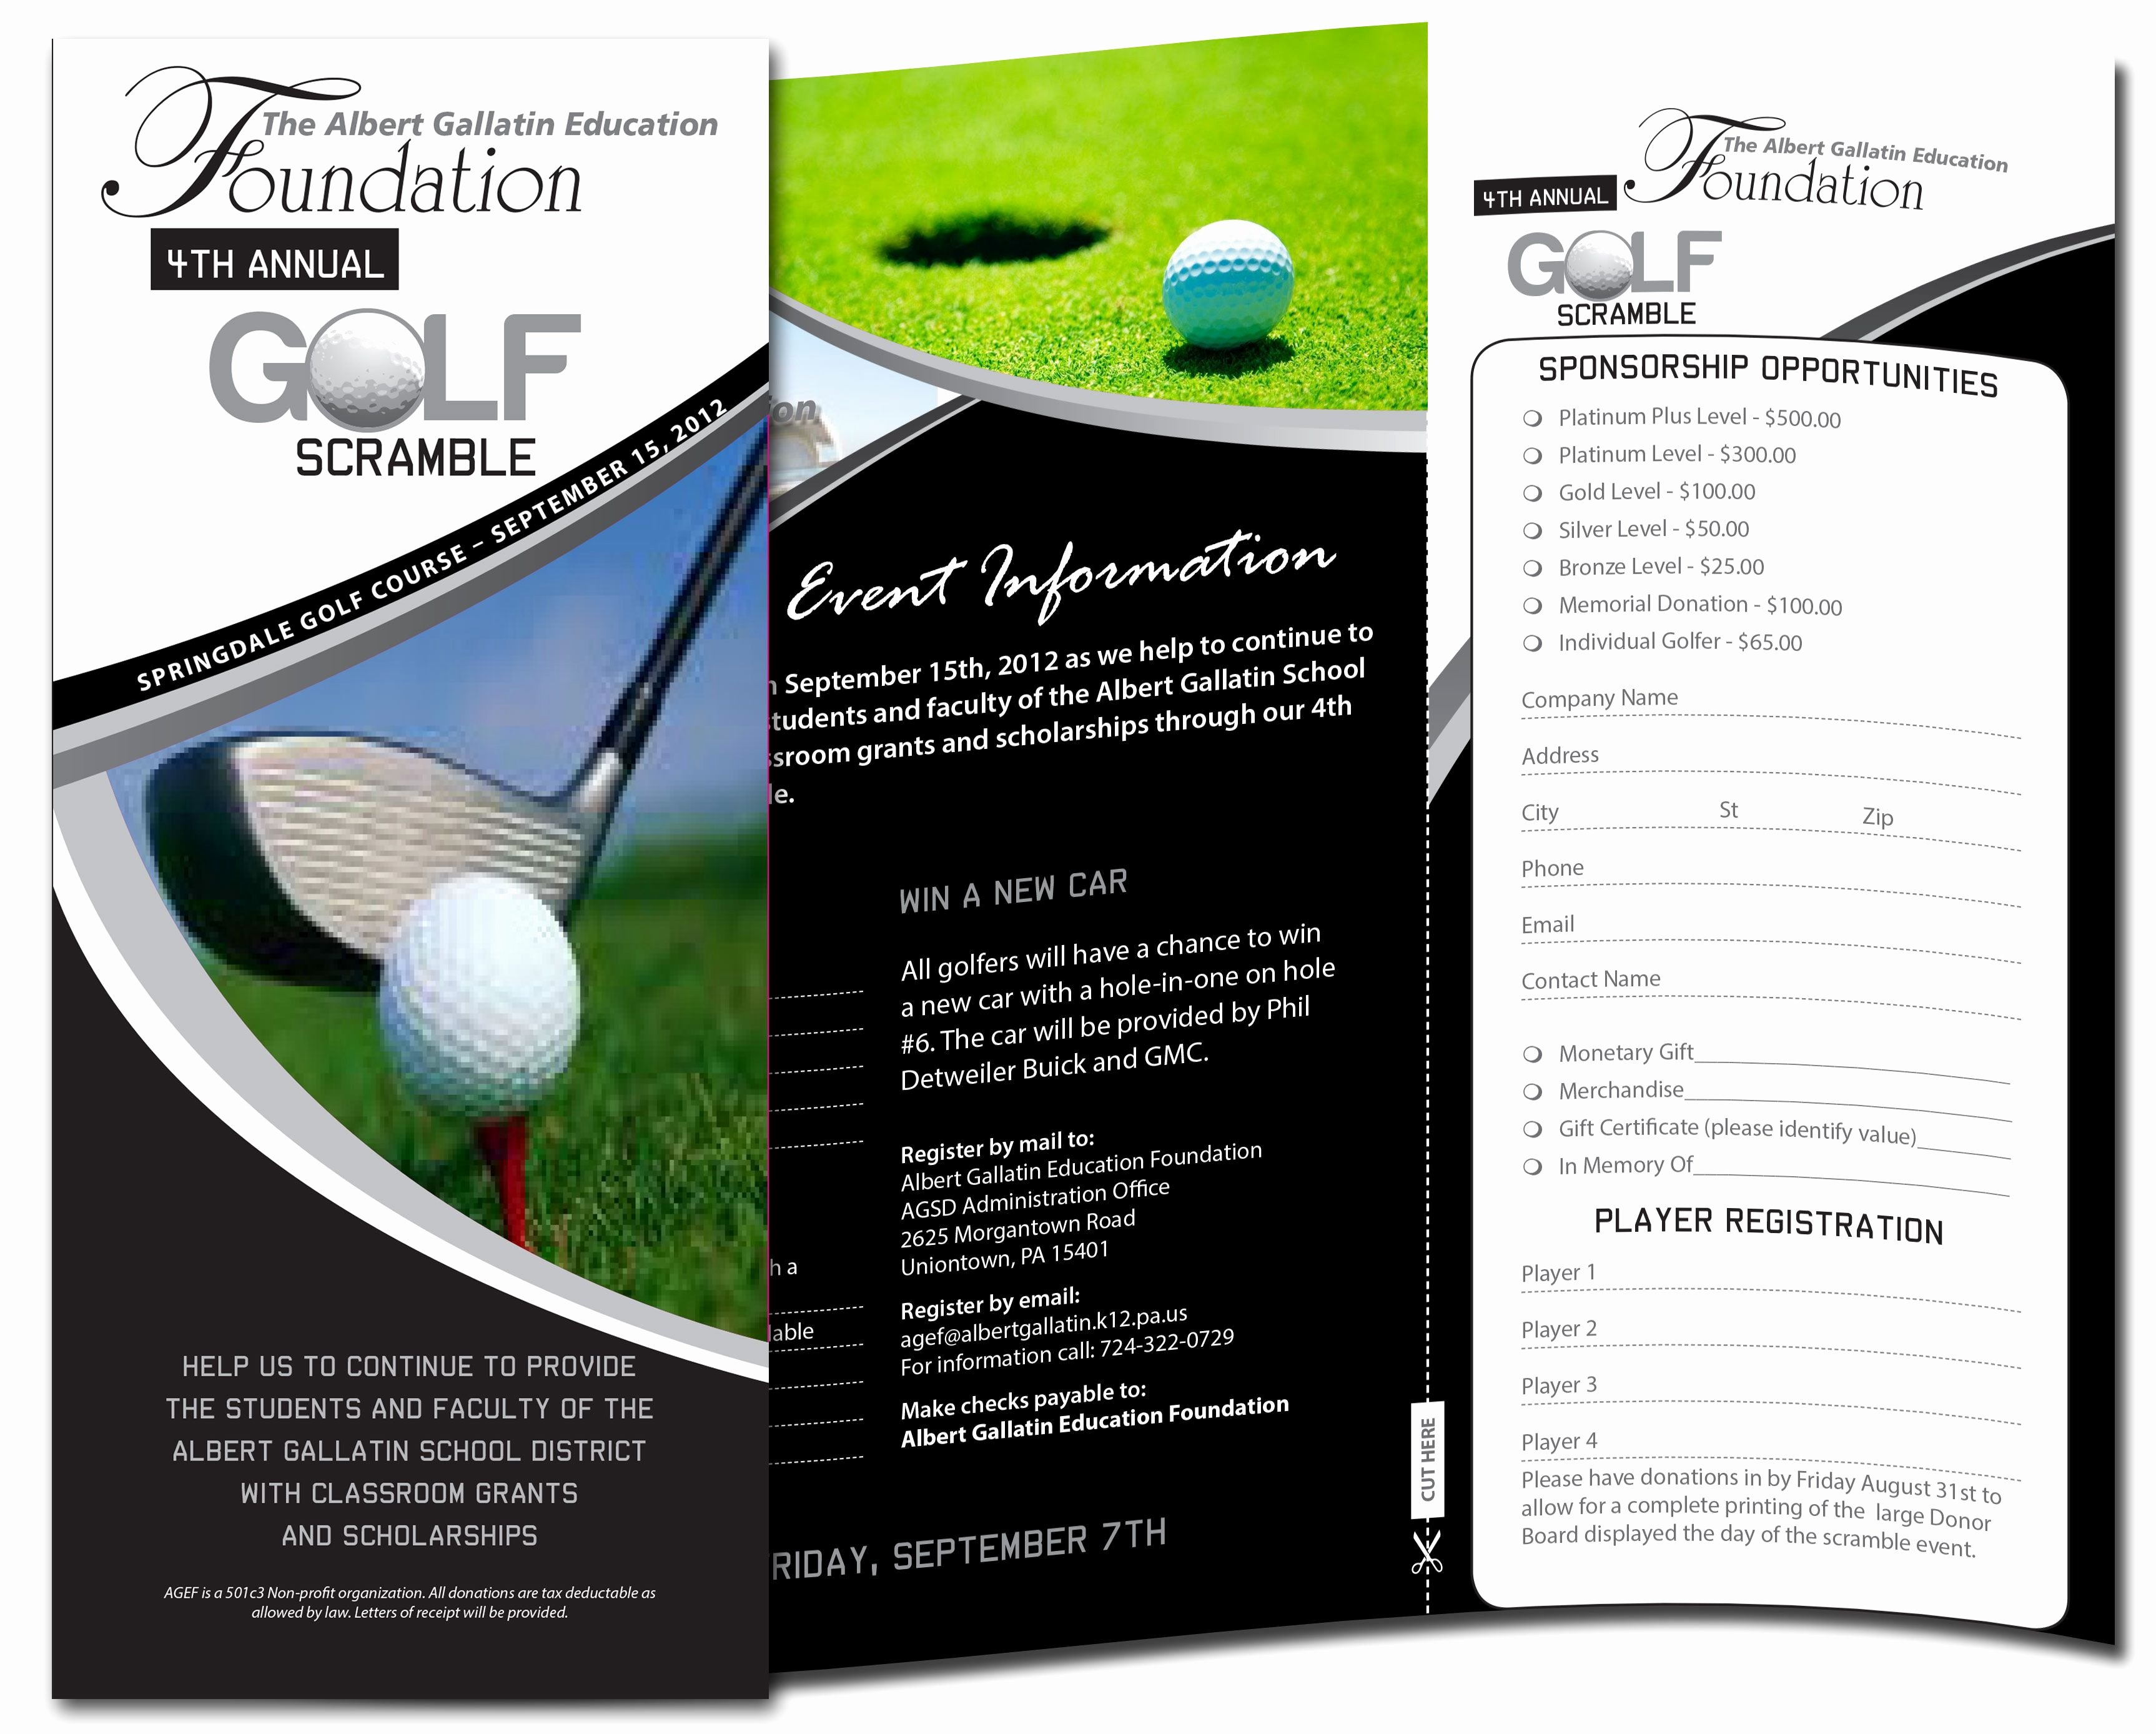 Golf Scramble Flyer Template New 2012 Albert Gallatin Education Foundation Golf Scramble